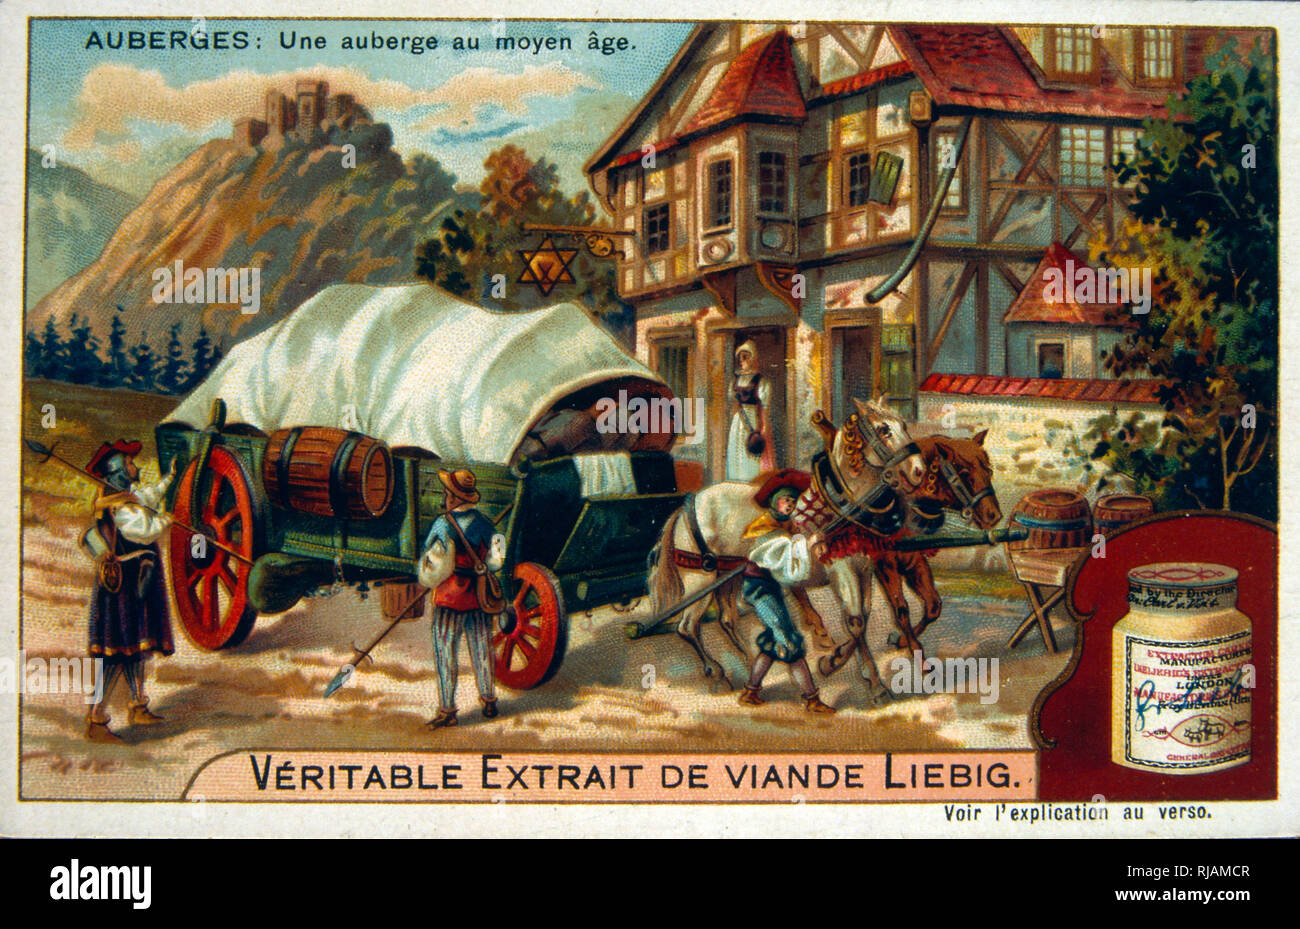 Caballos tirando de un vagón cubierto en la Edad Media; Francés Leibig tarjeta chromolithograph 1900 Foto de stock